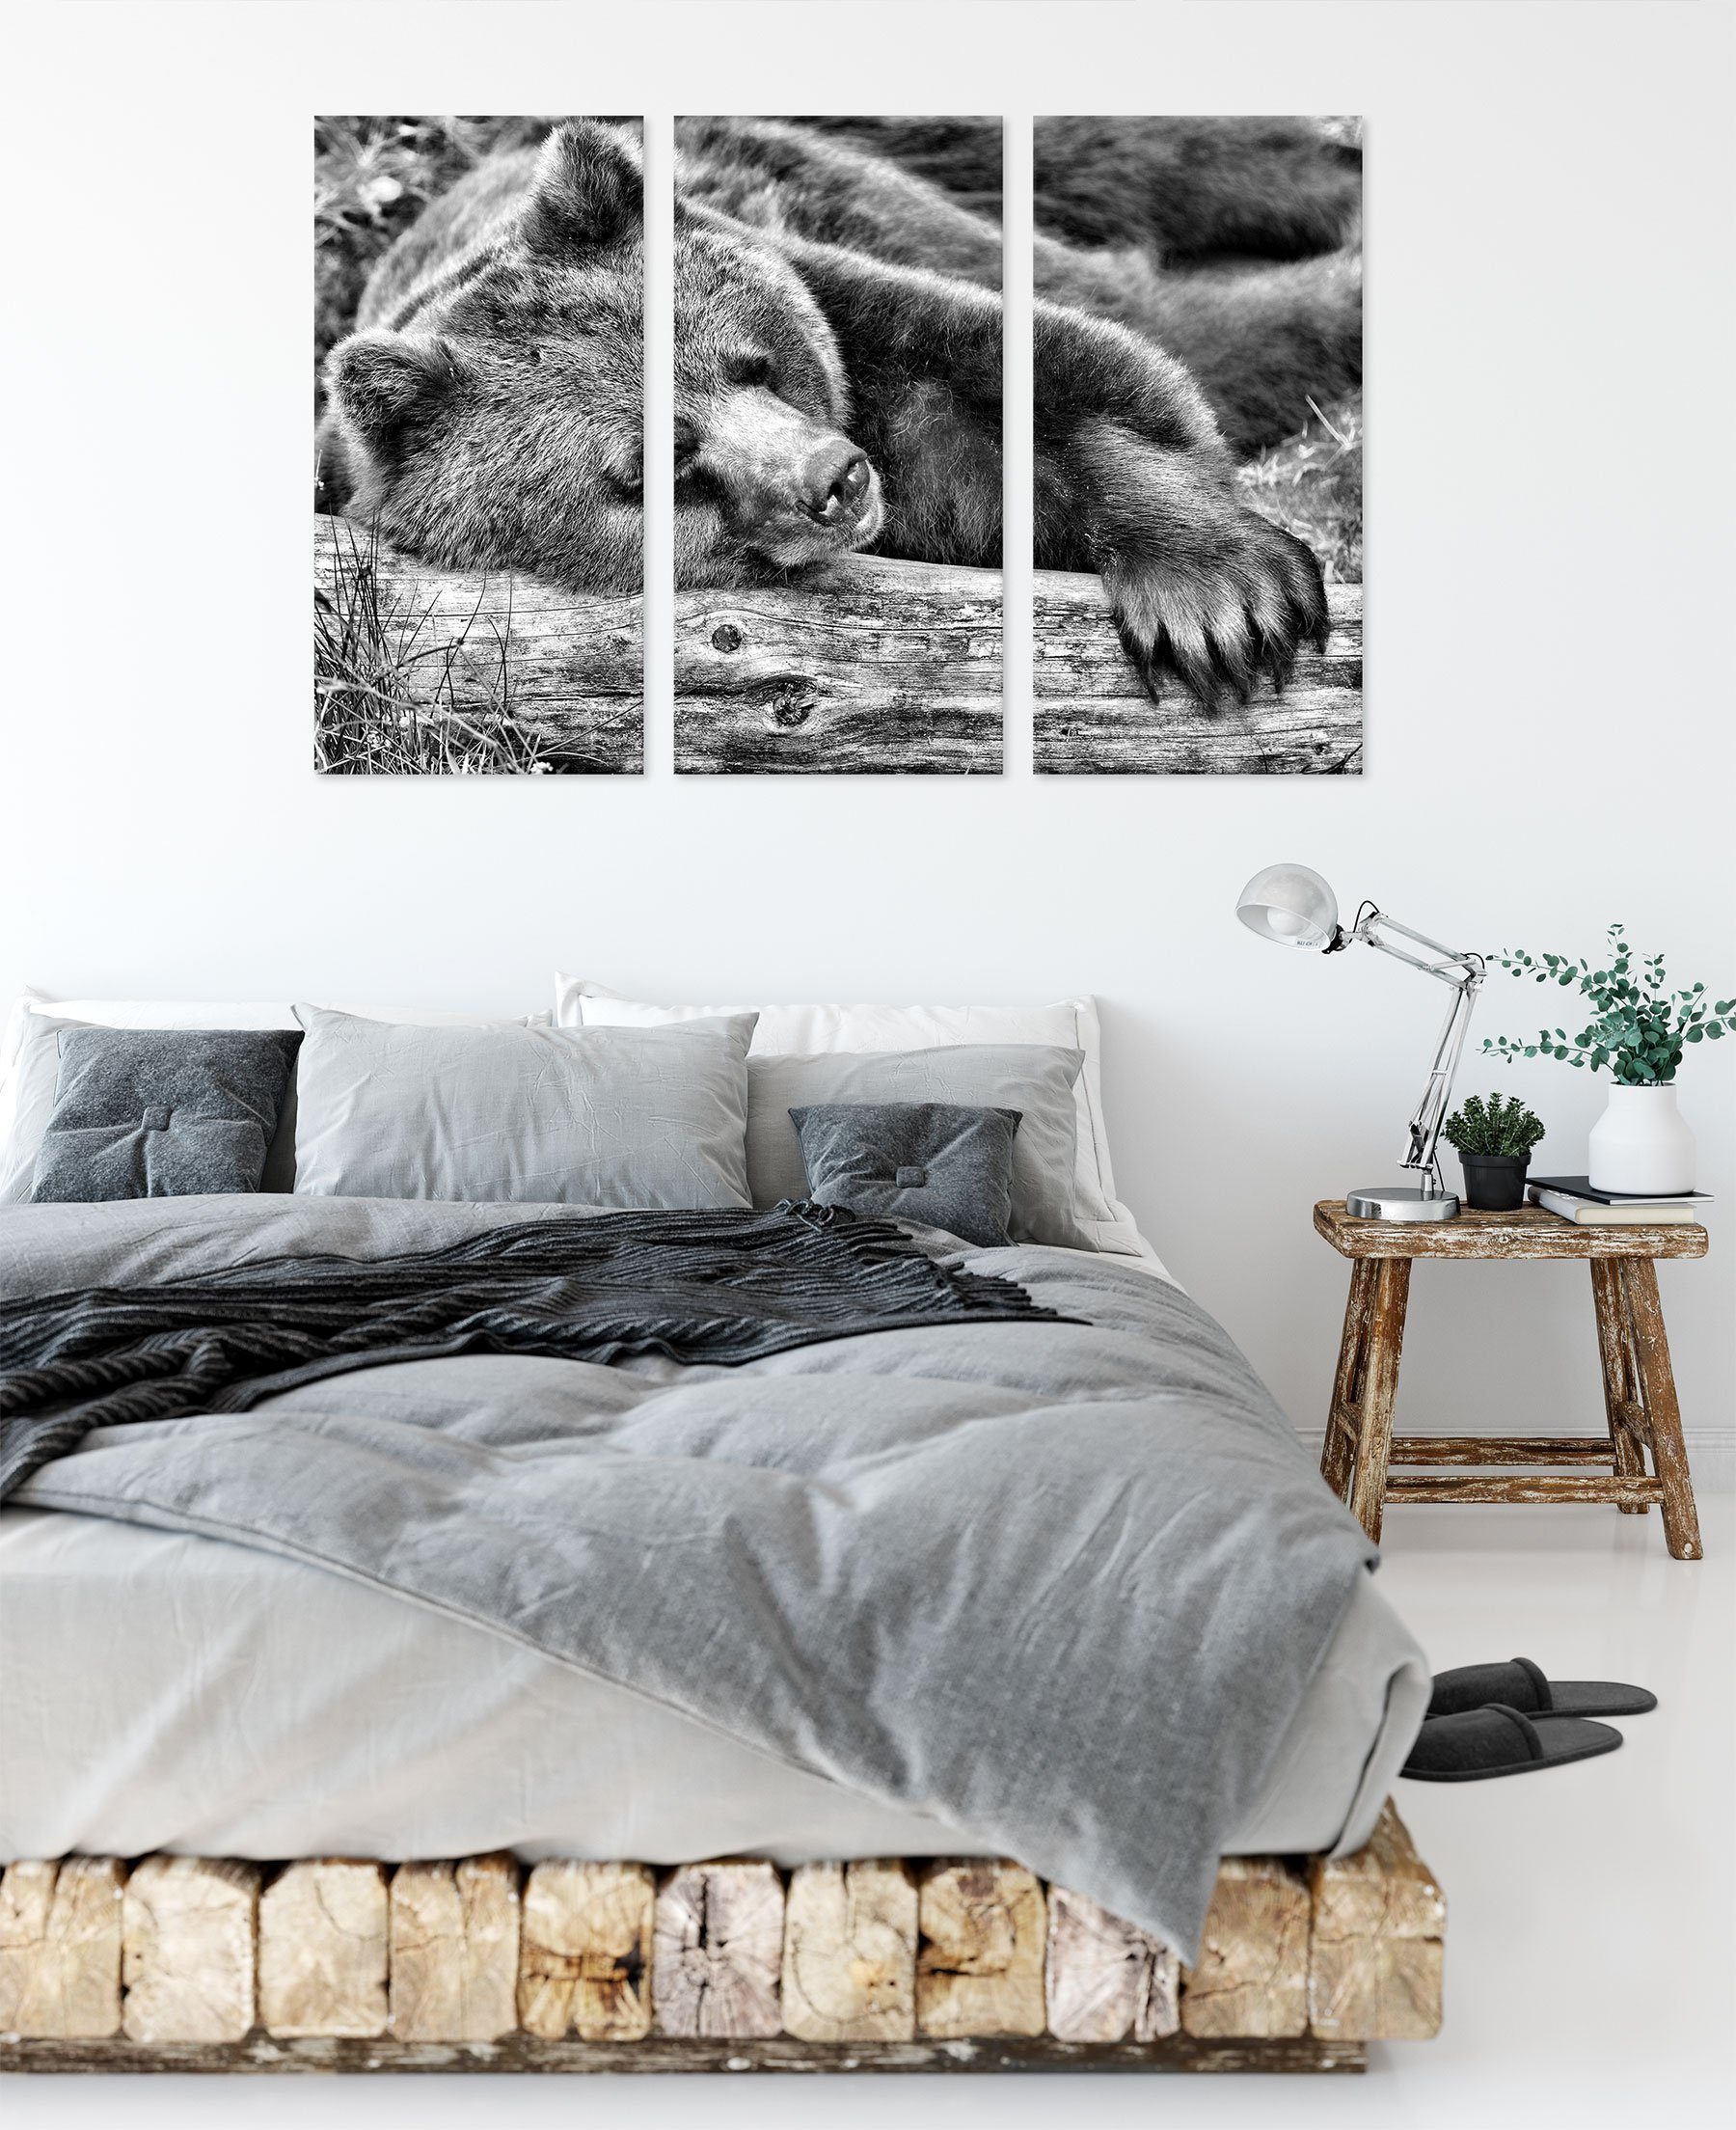 Pixxprint Leinwandbild Bär auf (120x80cm) Leinwandbild schläft schläft inkl. Bär Baumstamm auf 3Teiler bespannt, (1 Baumstamm, St), Zackenaufhänger fertig